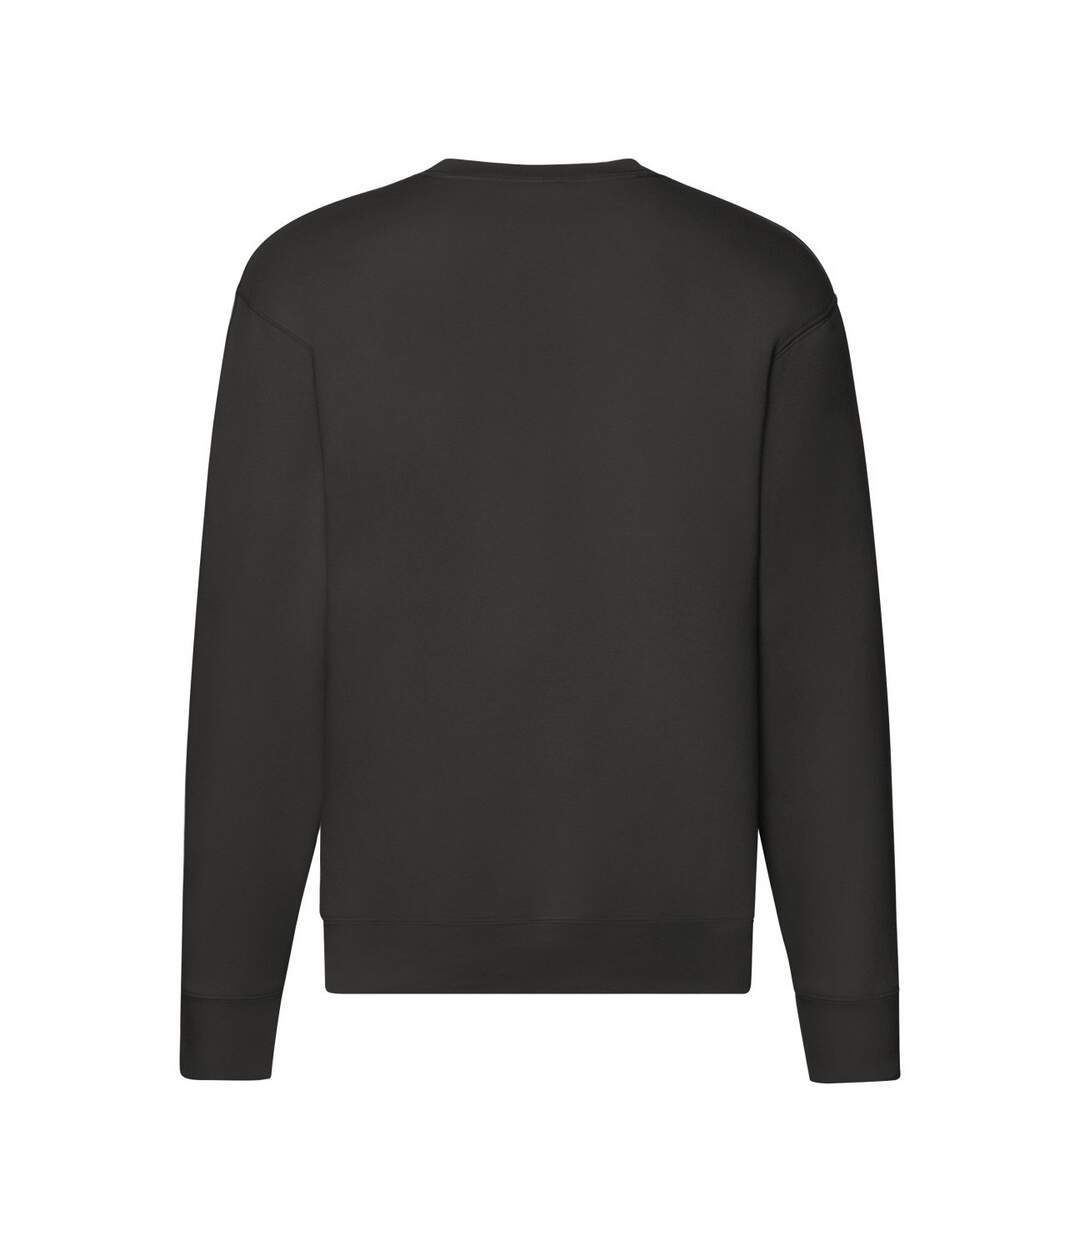 Fruit of the Loom Mens Premium Set-in Sweatshirt (Charcoal)